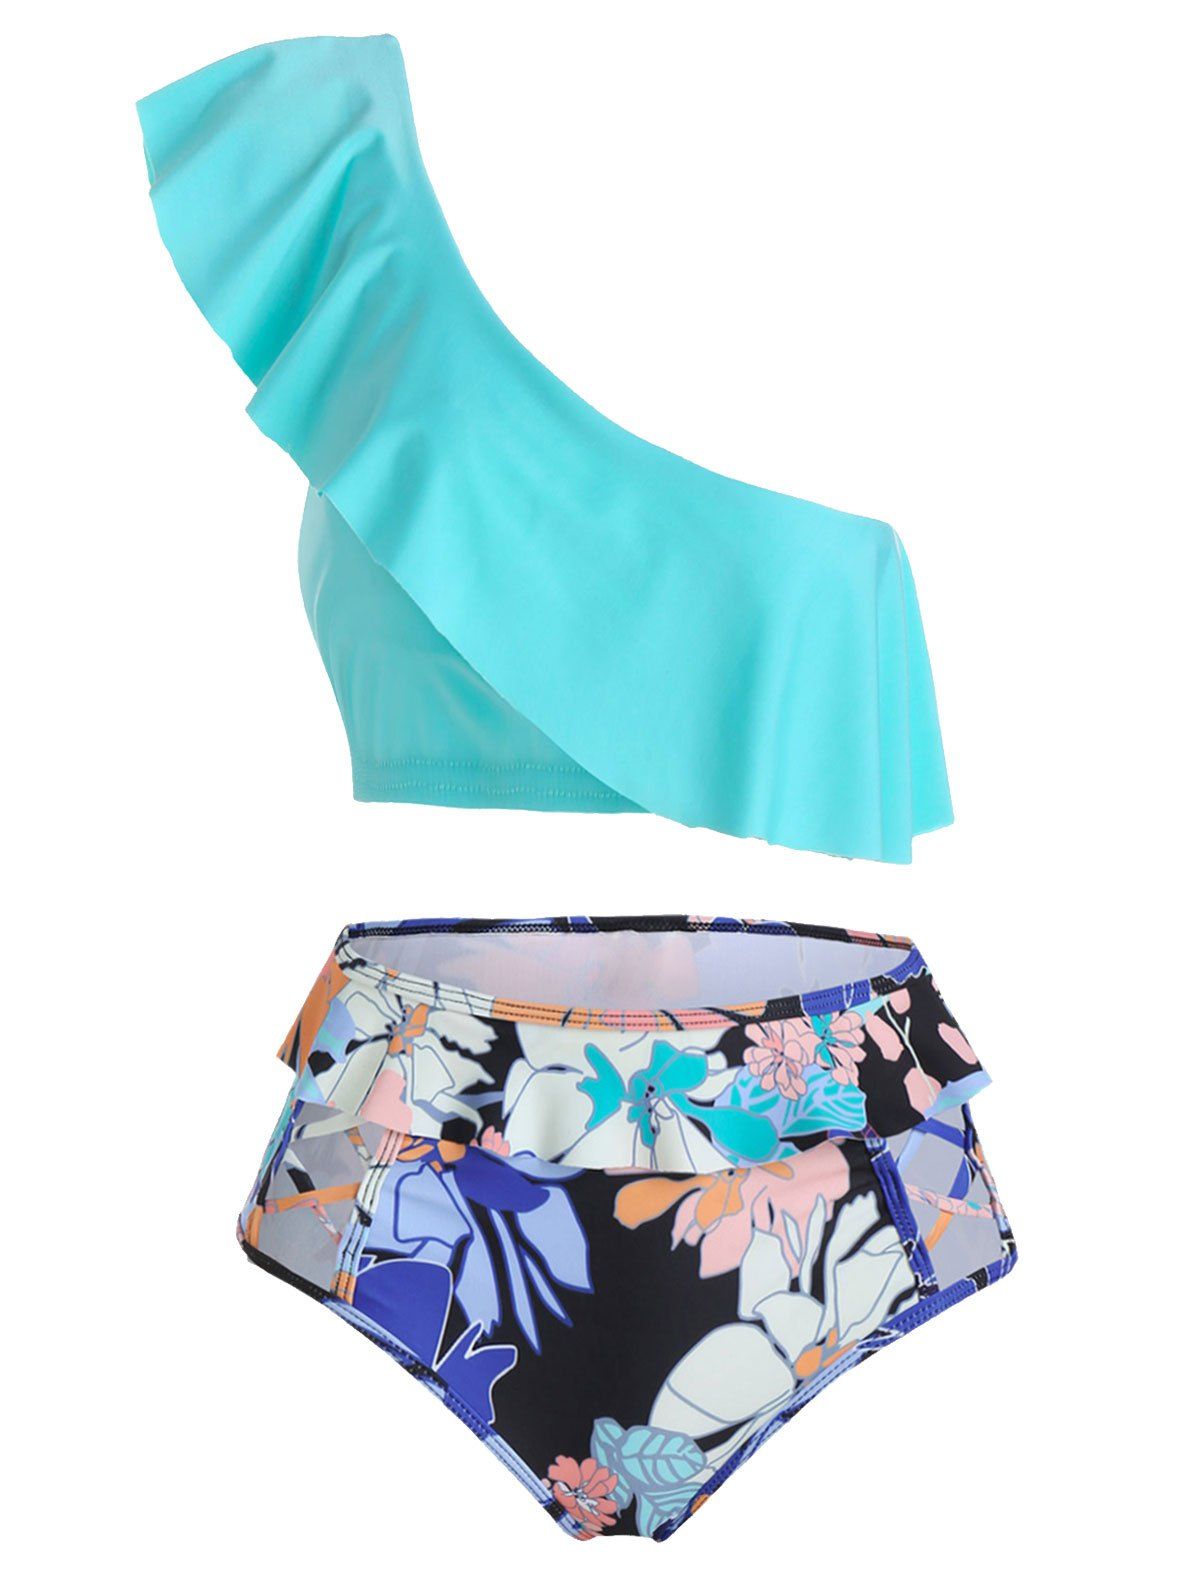 One Shoulder Floral Print Flounce Padded Tankini Swimwear - MEDIUM TURQUOISE M